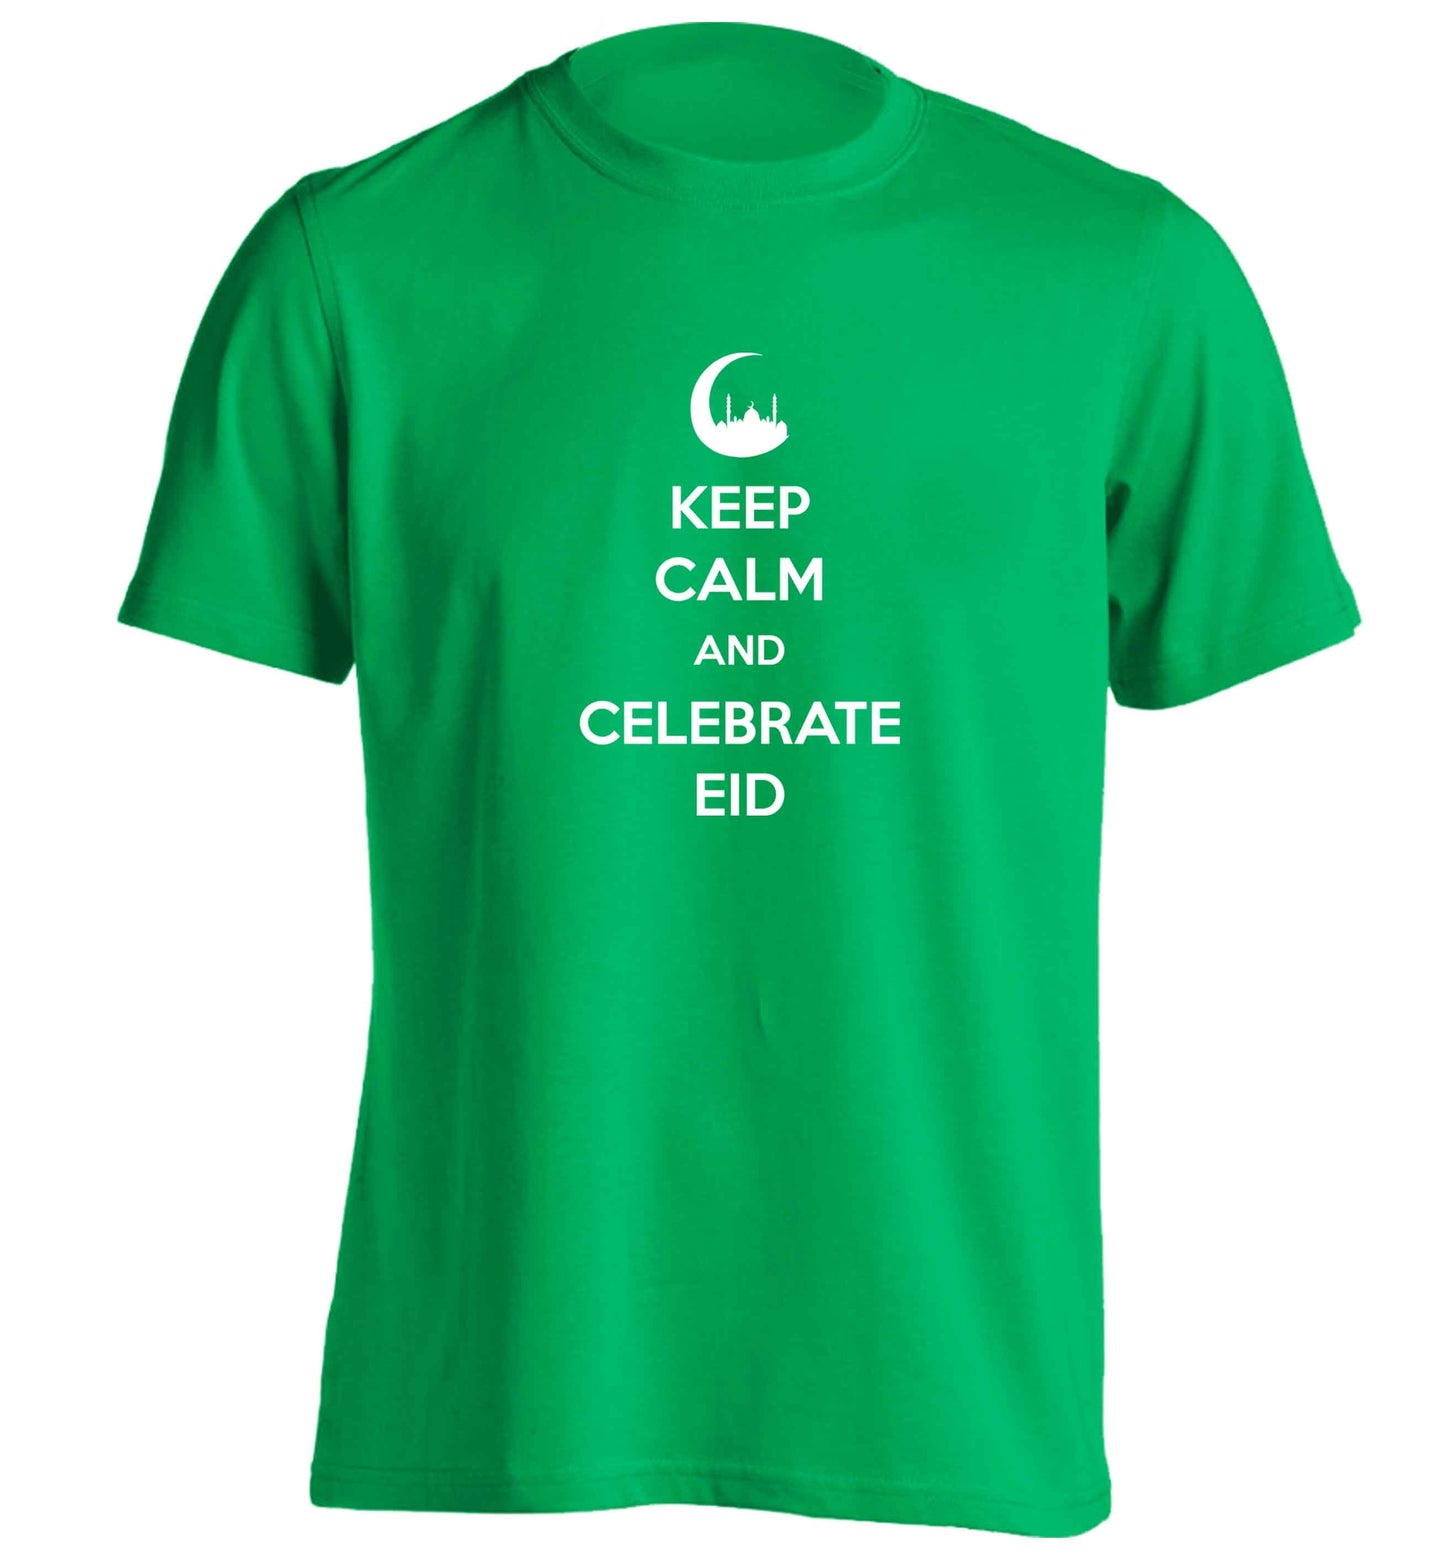 Keep calm and celebrate Eid adults unisex green Tshirt 2XL